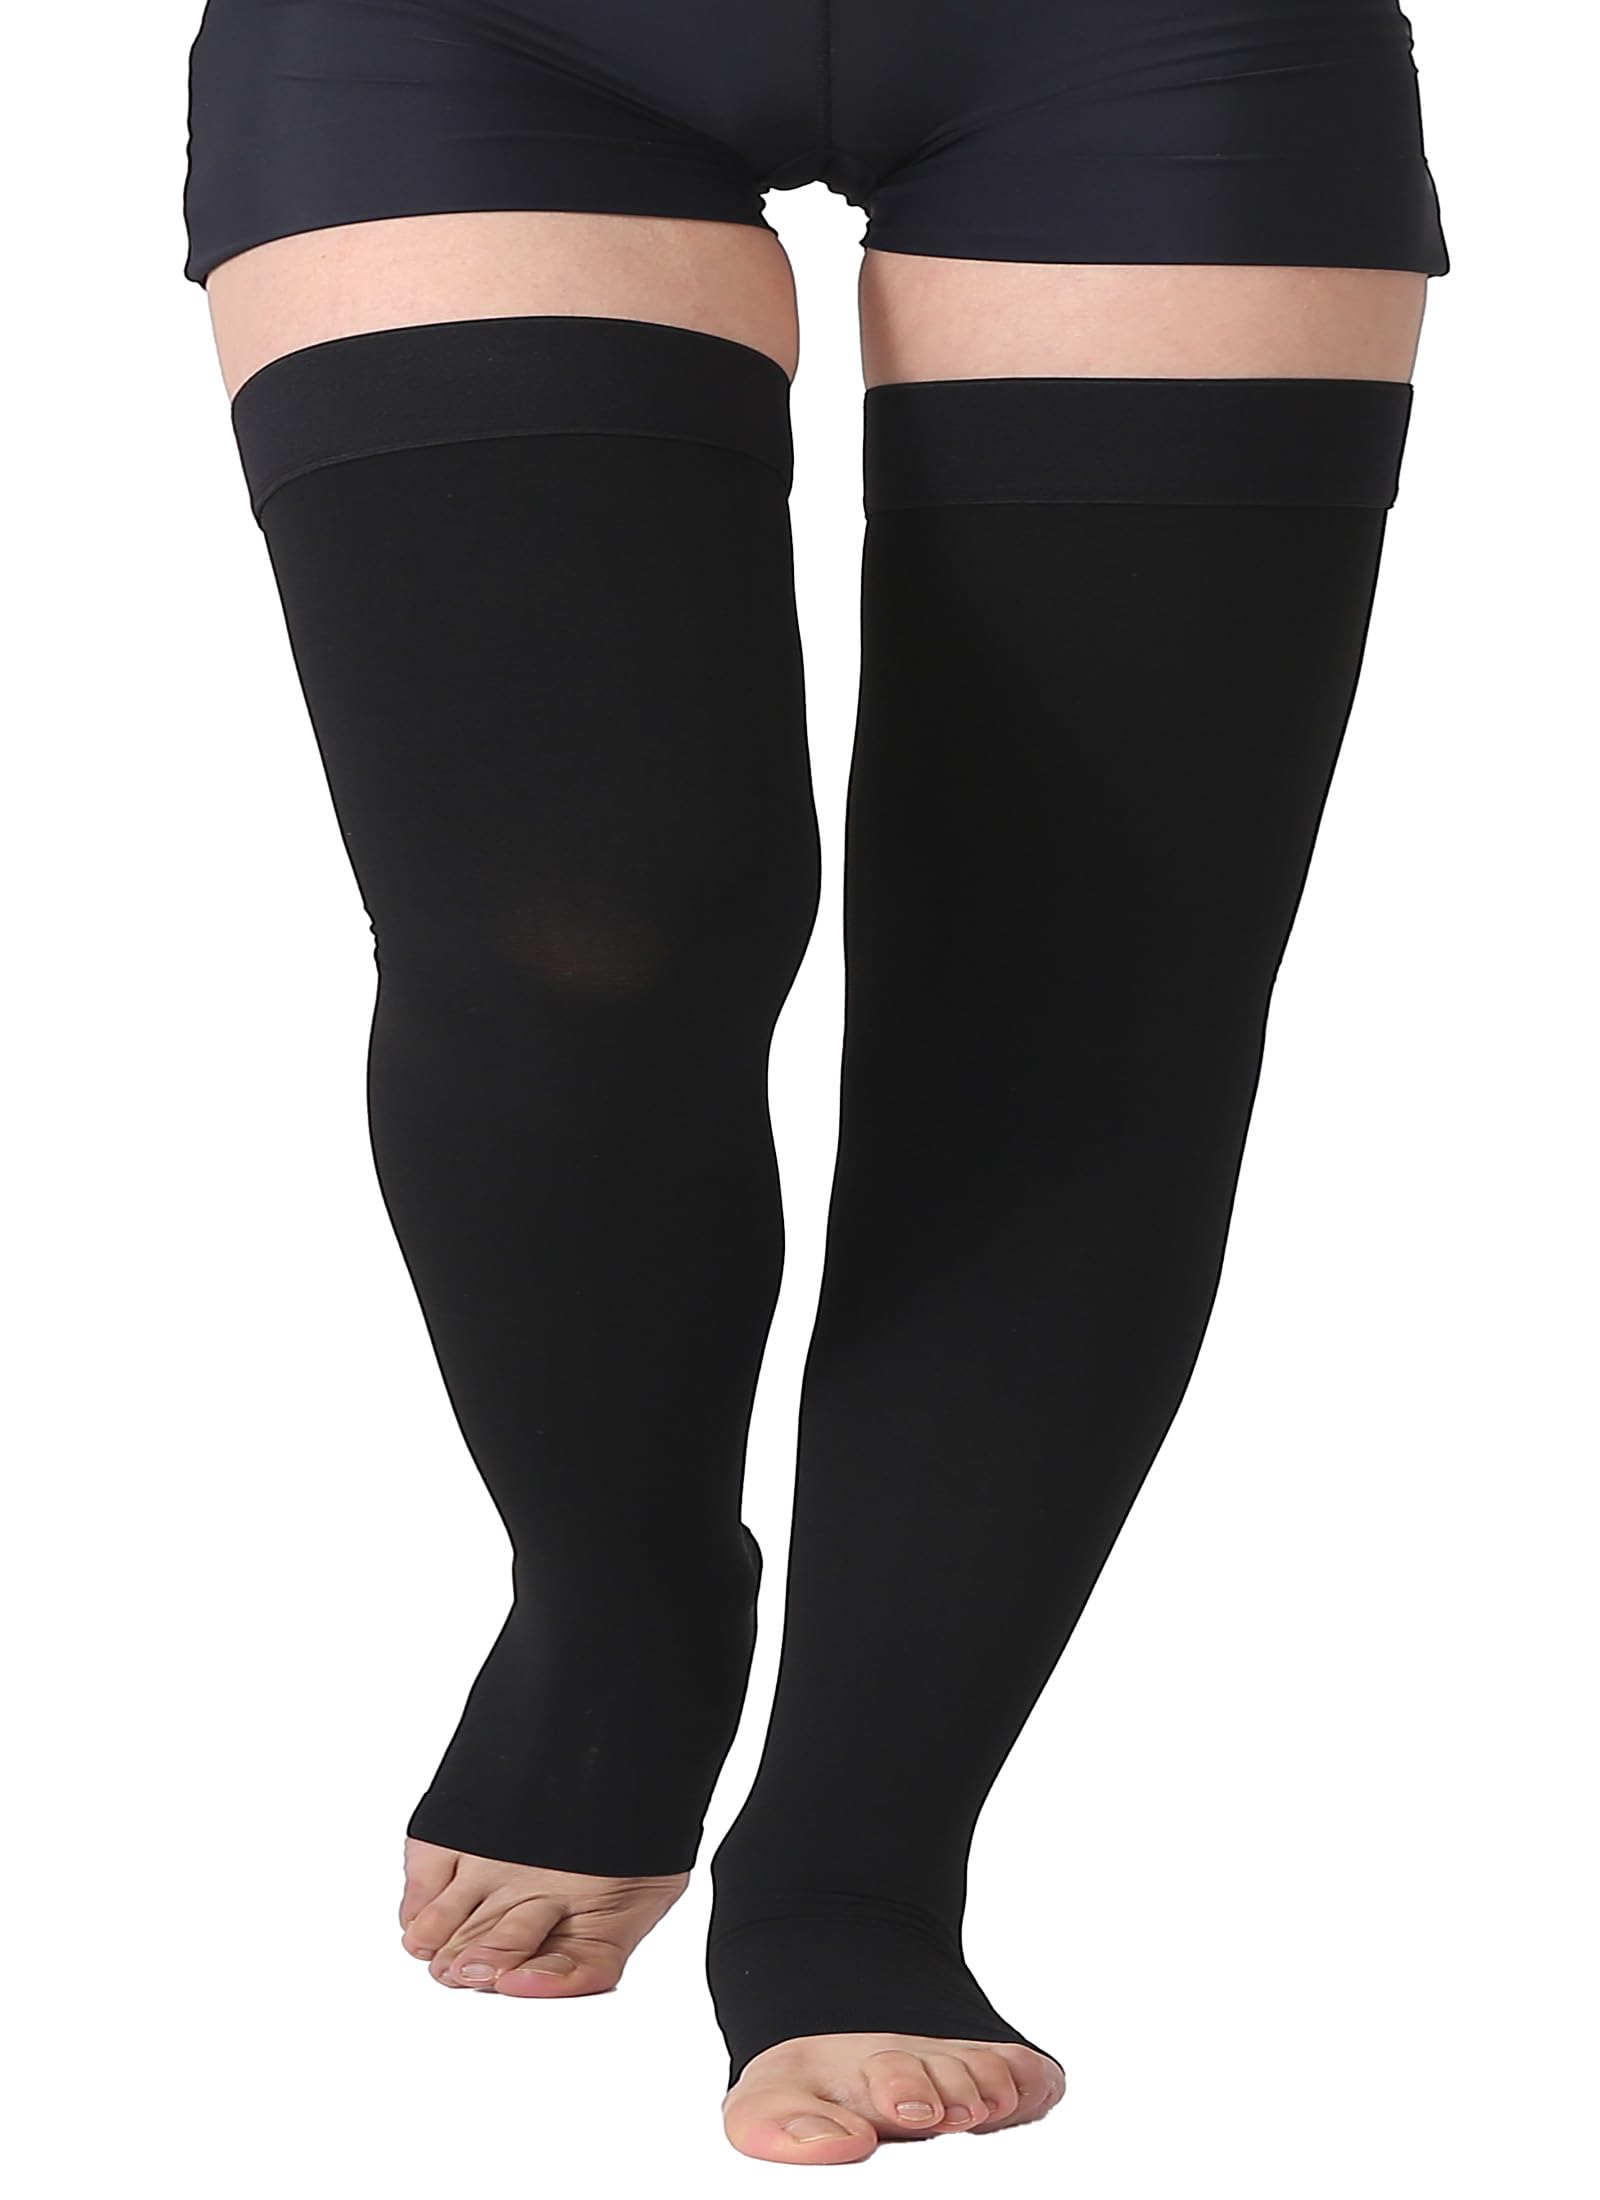 Compression Socks Men Women Edema Diabetics Varicose Veins 20-30 mmHg  Stockings